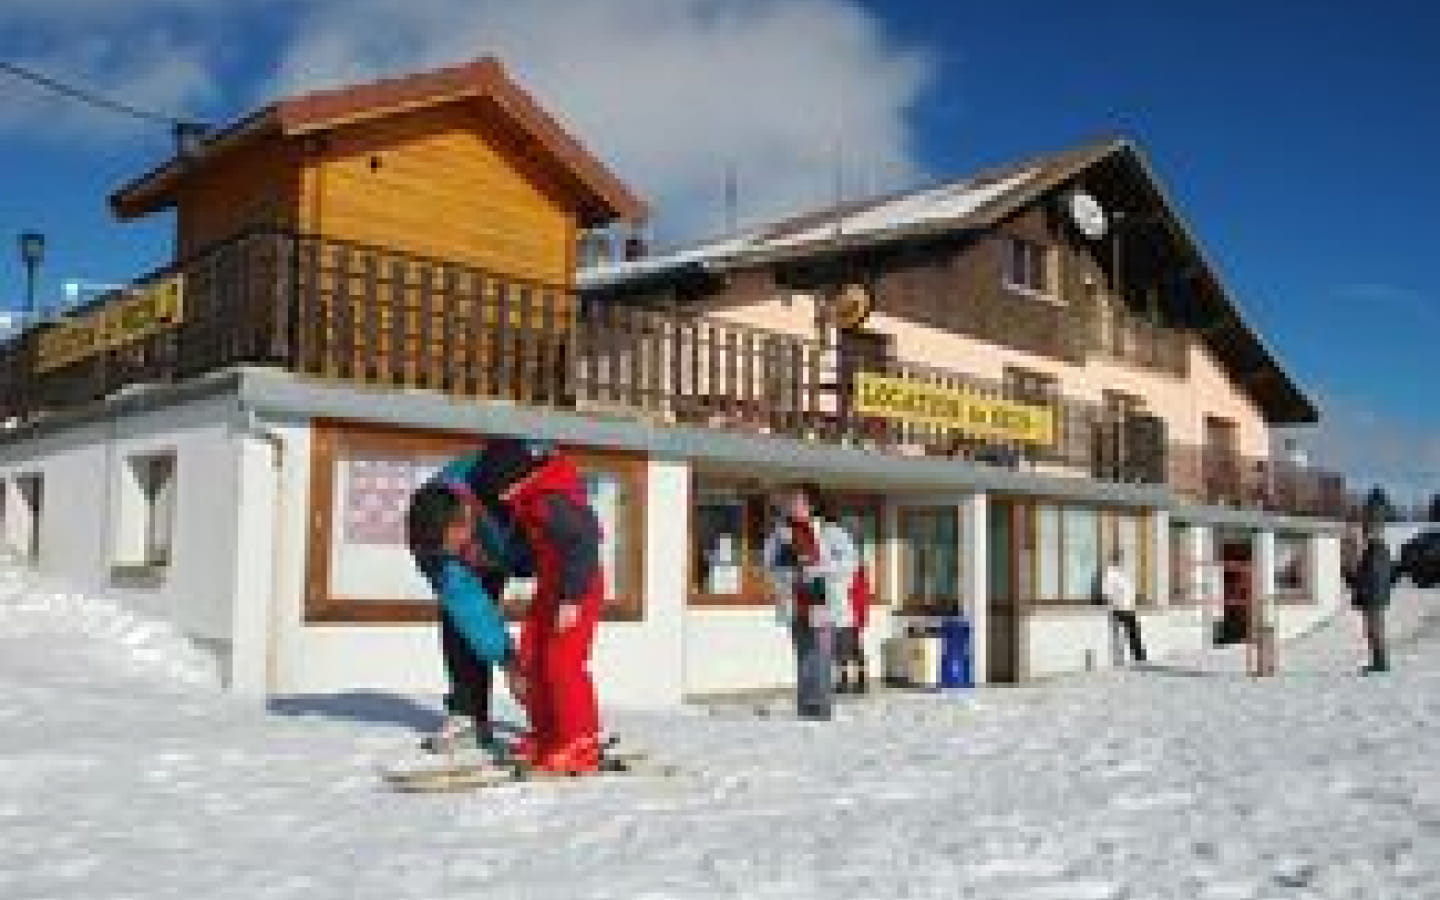 Location de matériel de ski - Les Rangs